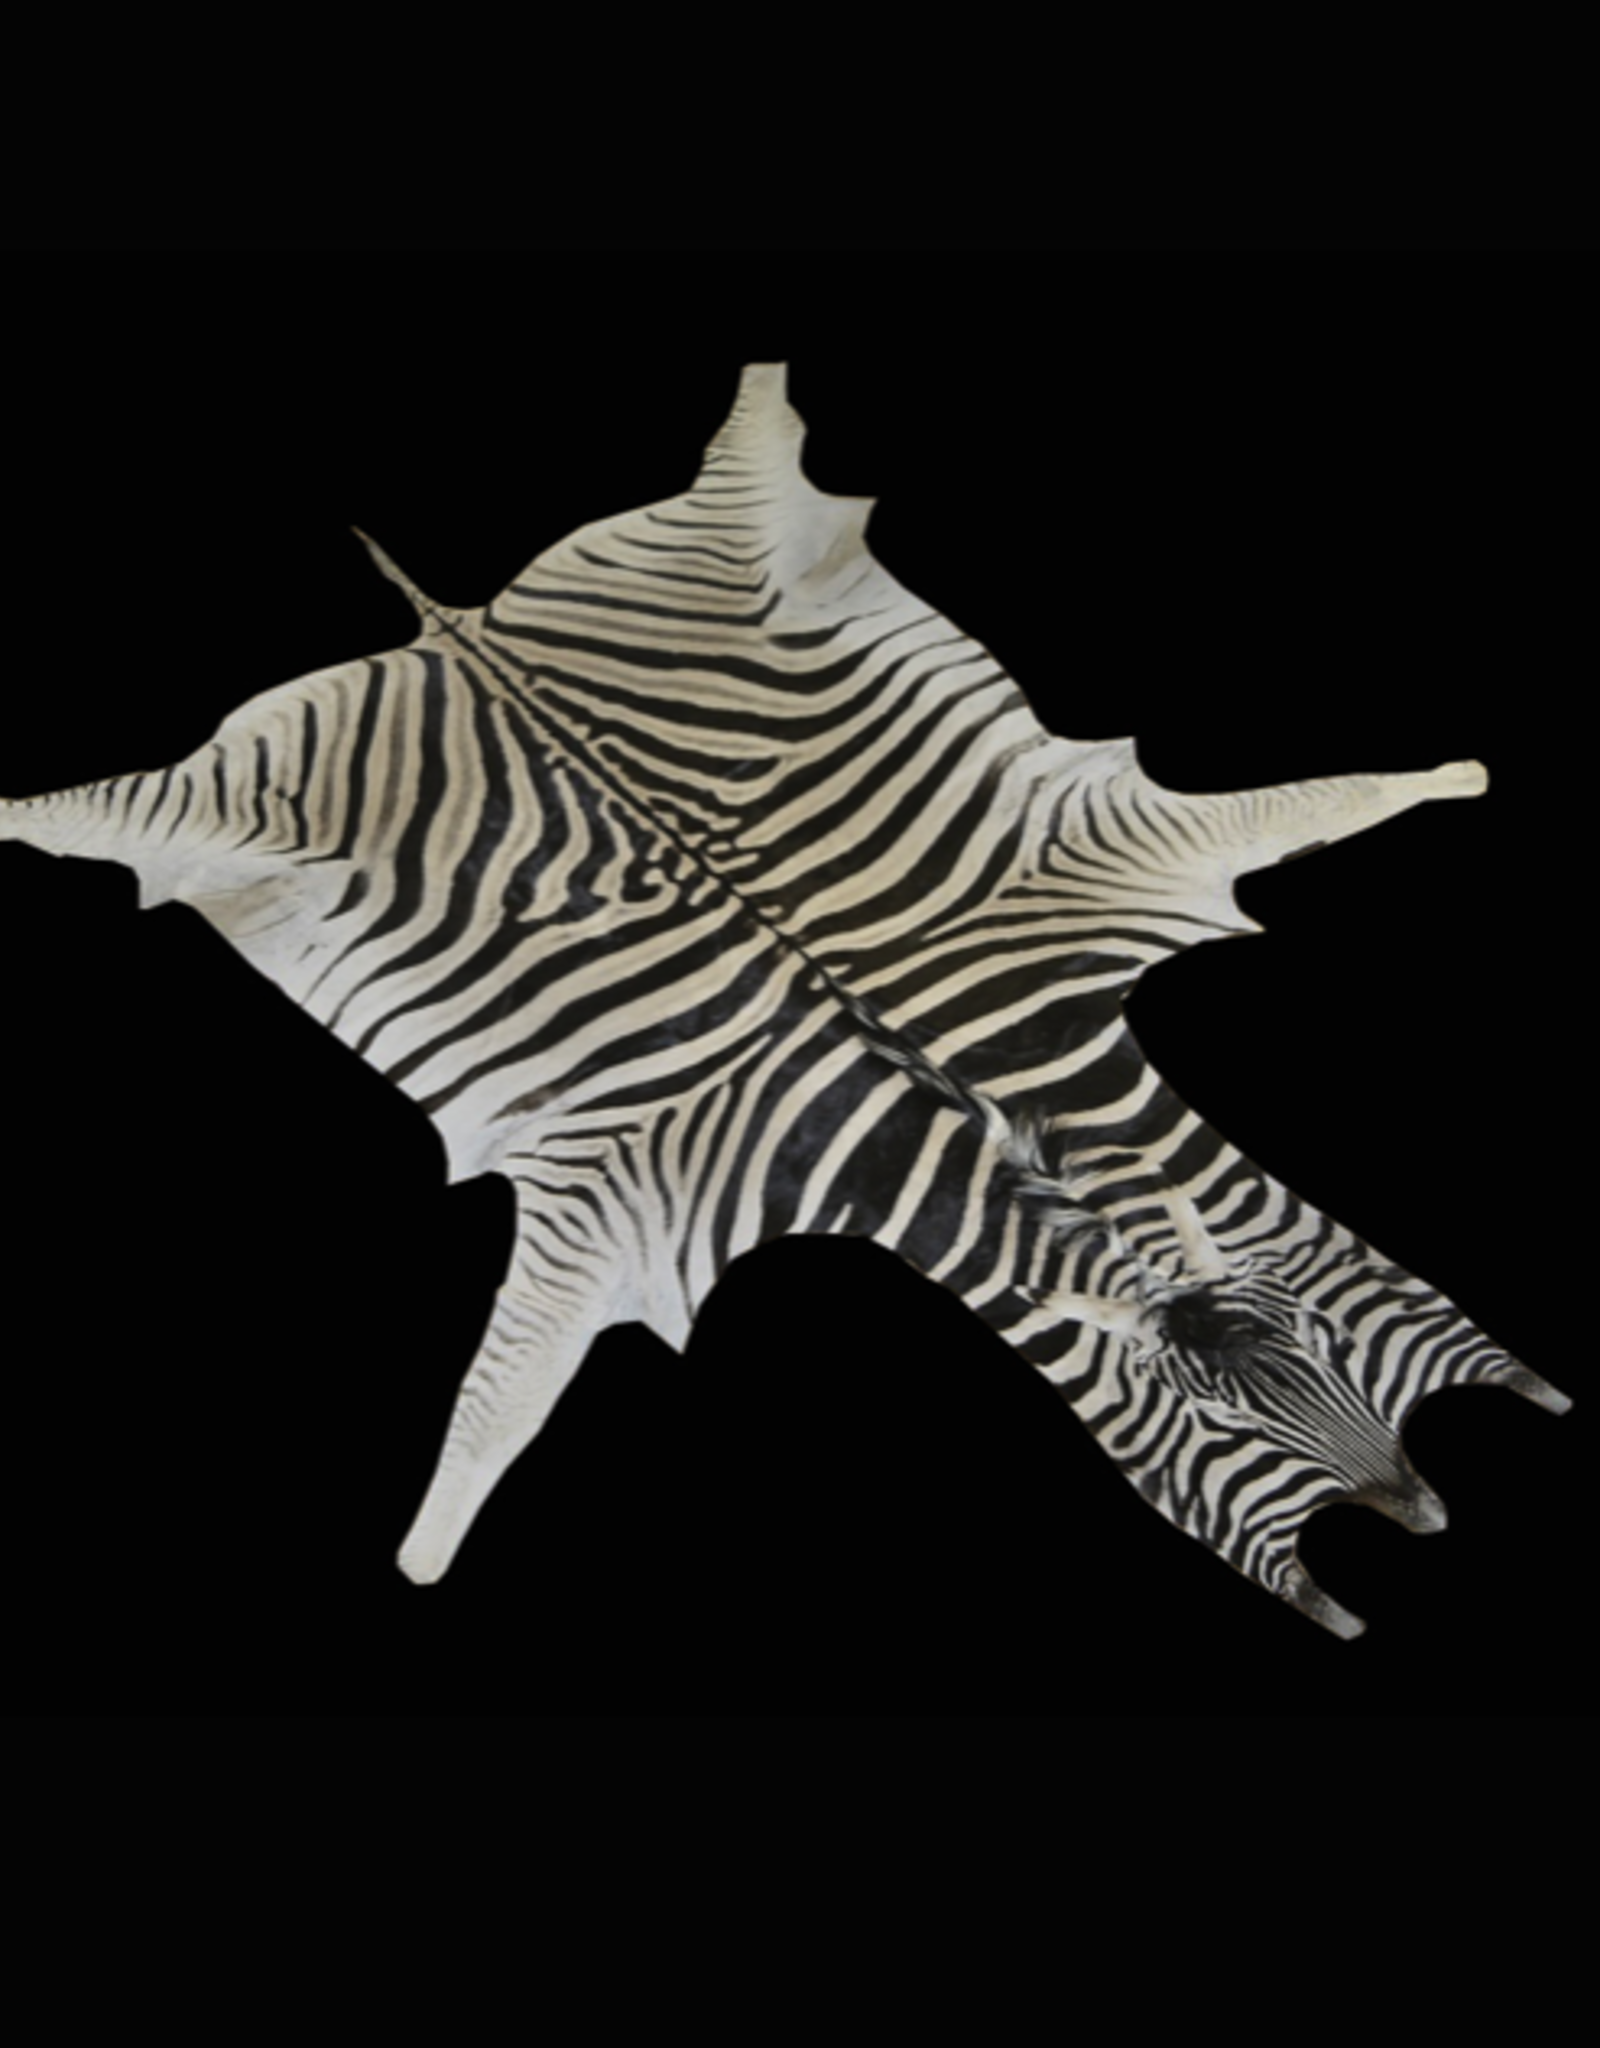 Zebra fur M321 Okahanja